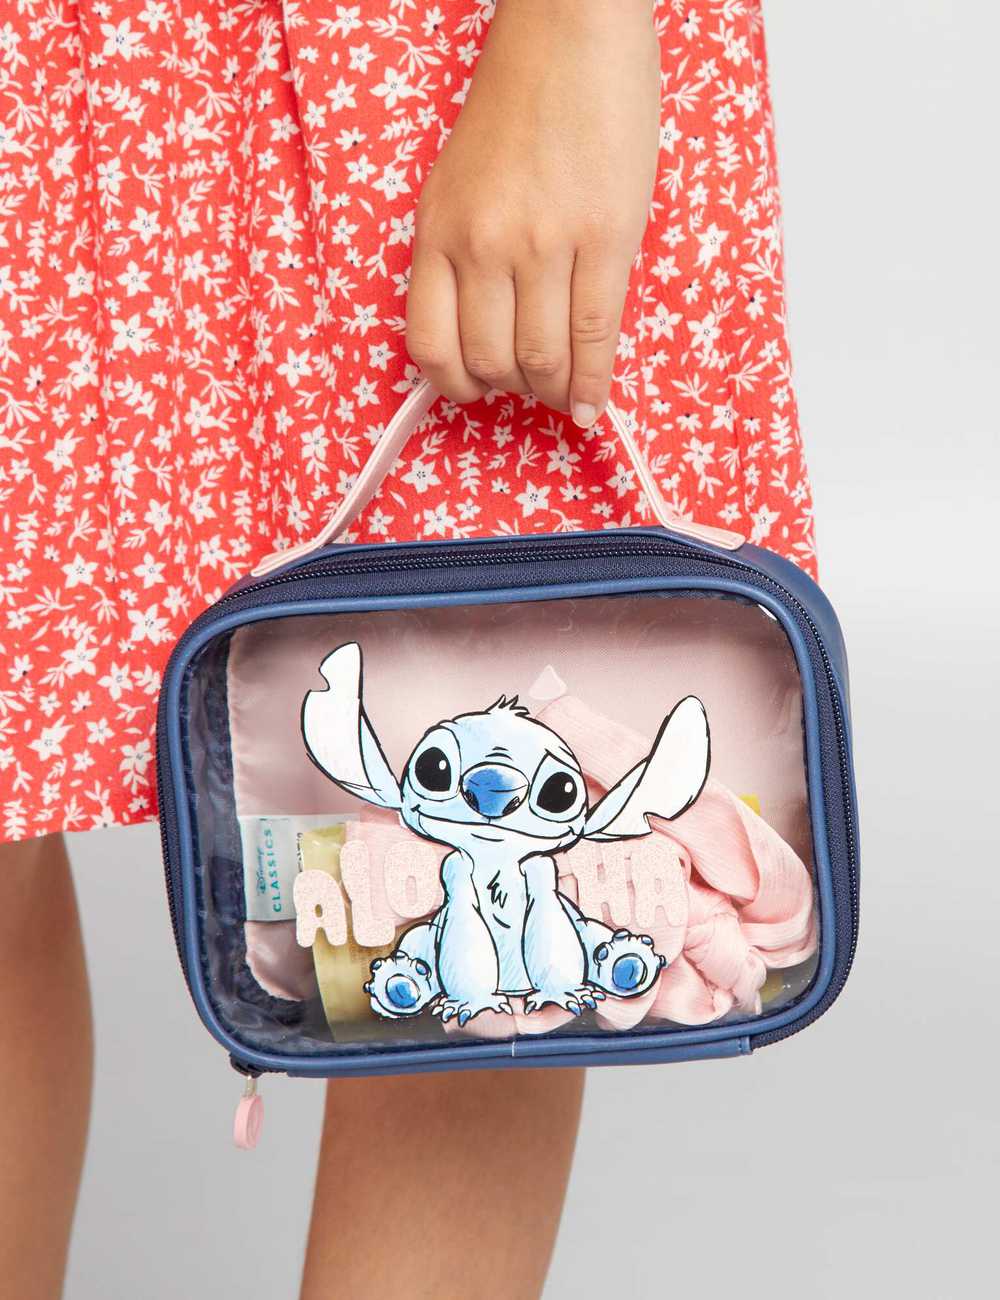 Buy Pack of 3 pairs of 'Disney' 'Stitch' briefs Online in Dubai & the  UAE